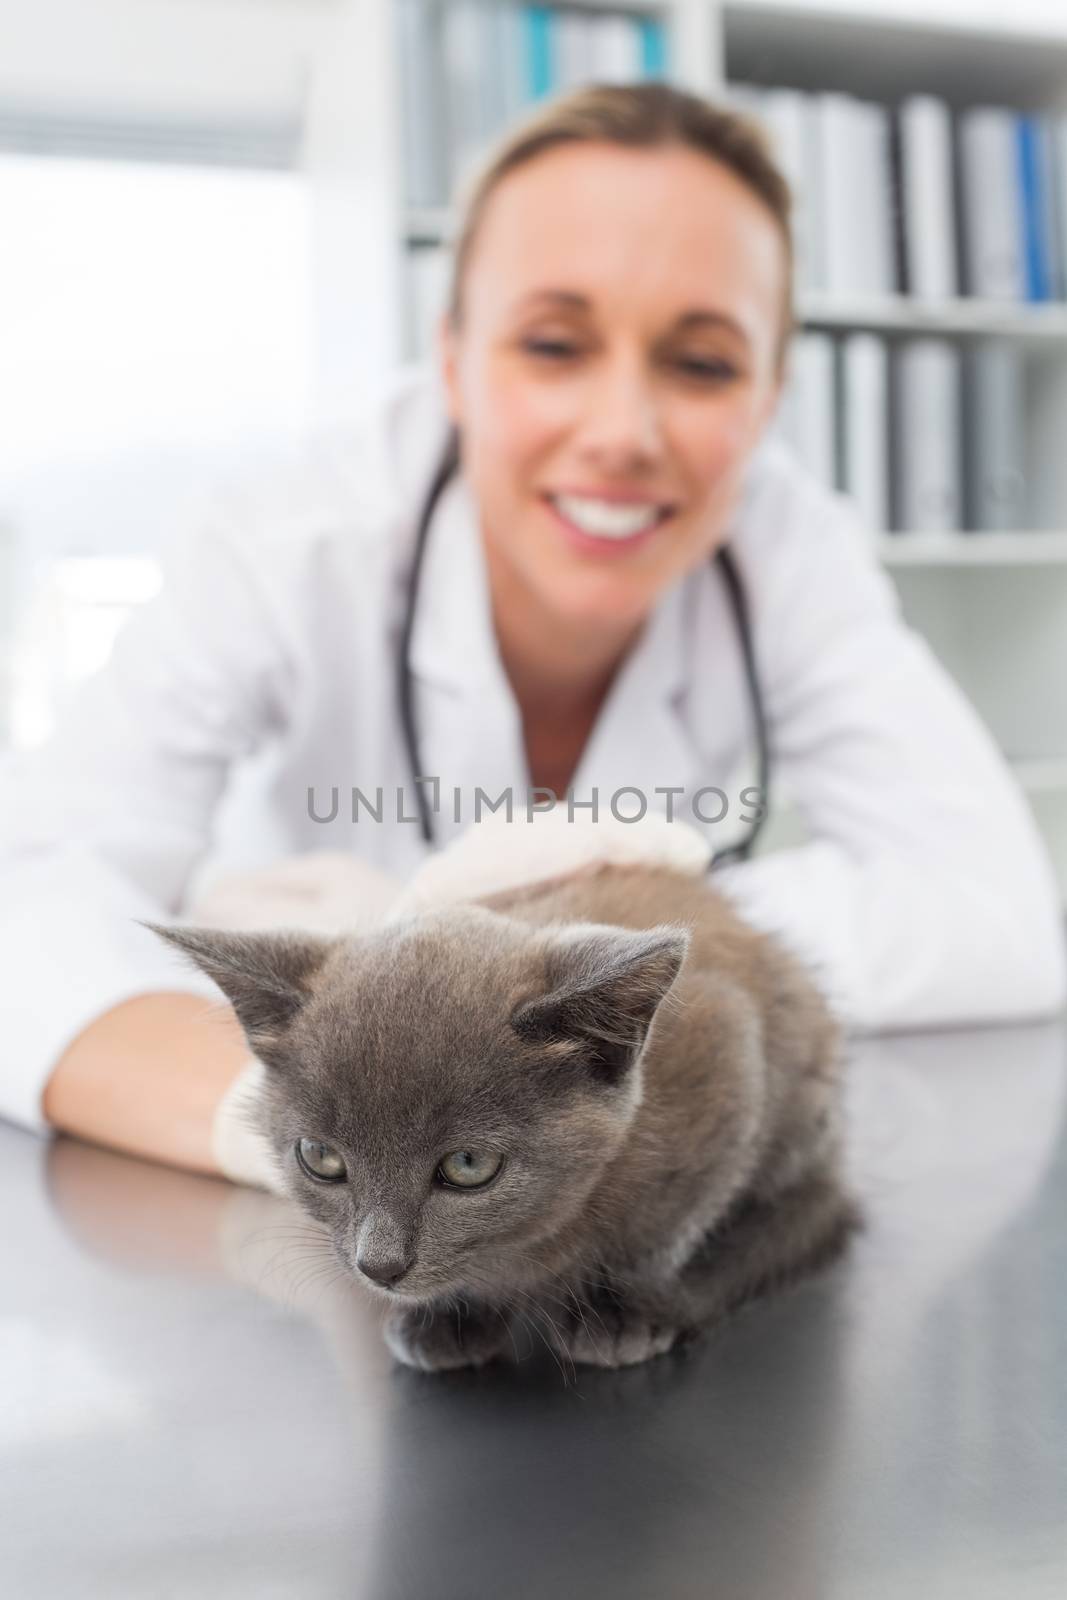 Kitten being examined by vet by Wavebreakmedia